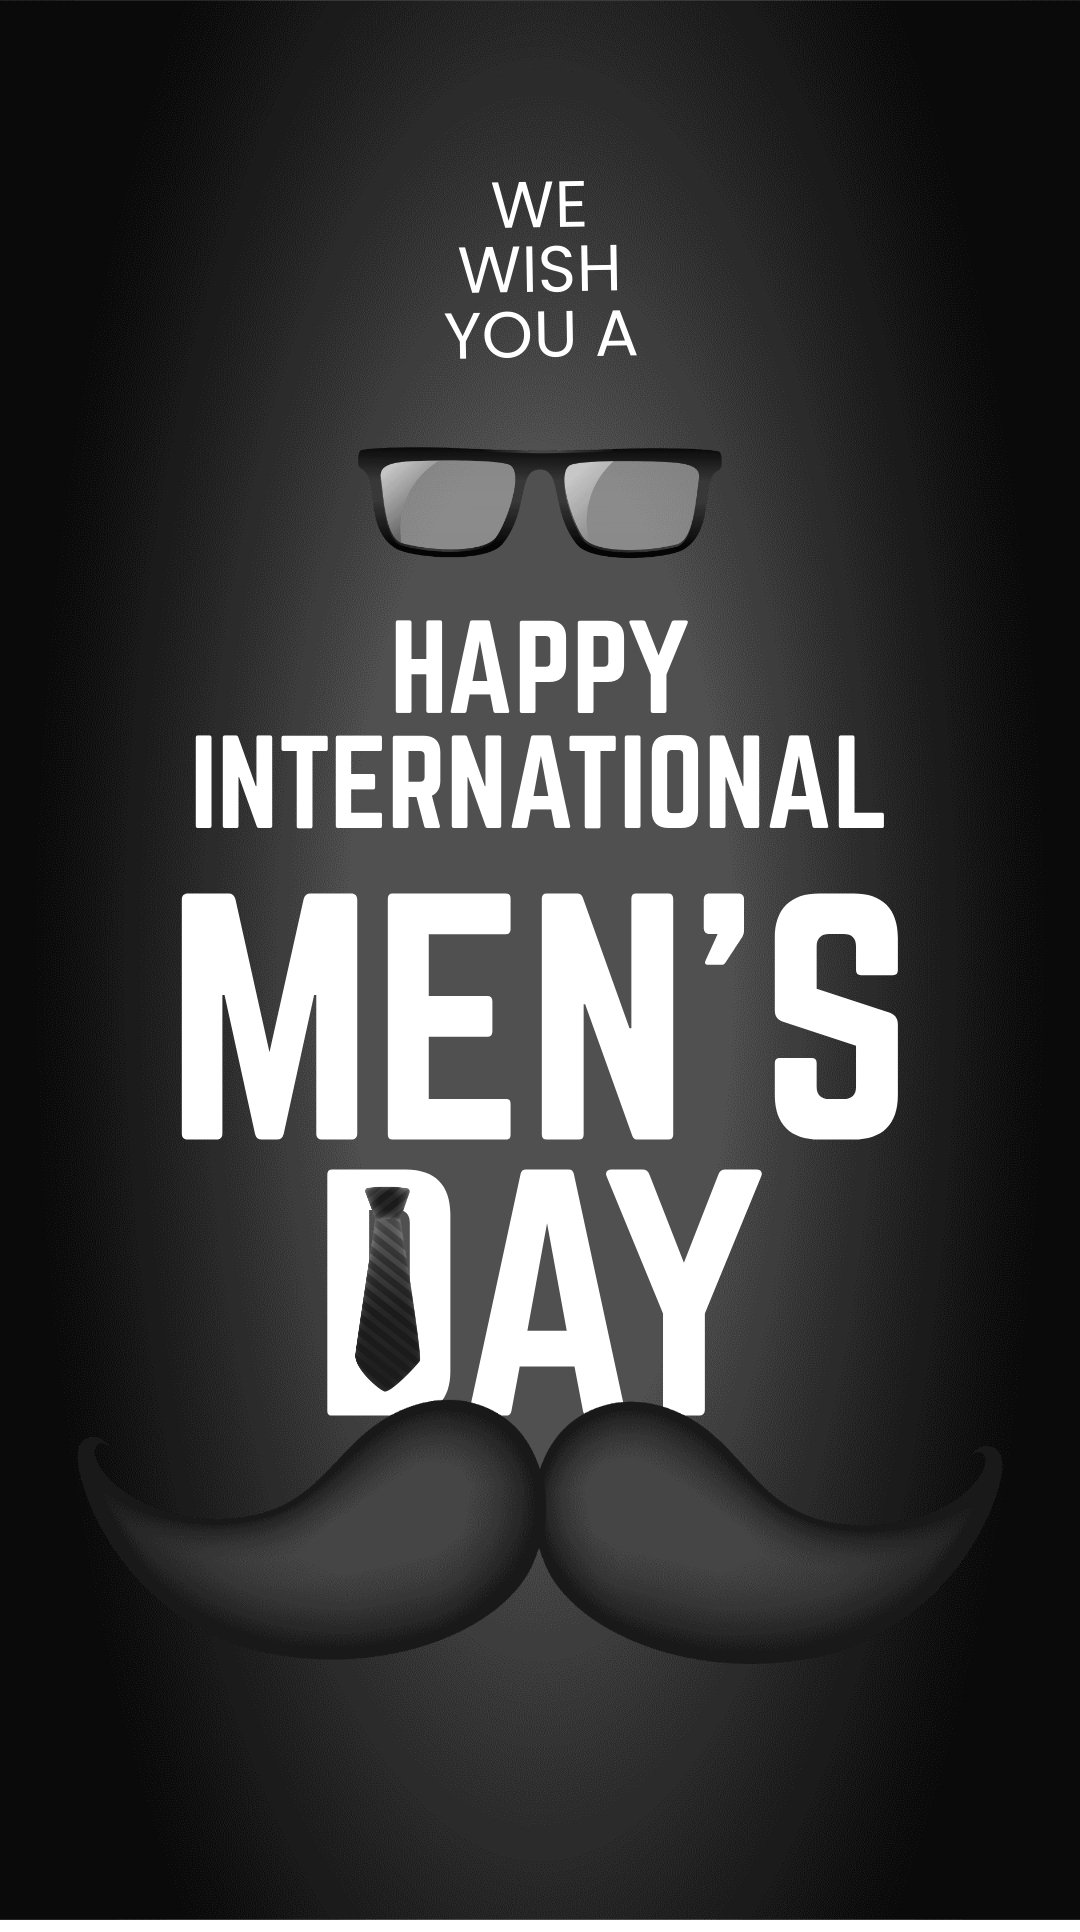 International Mens Day Wishes Whatsapp Post Template